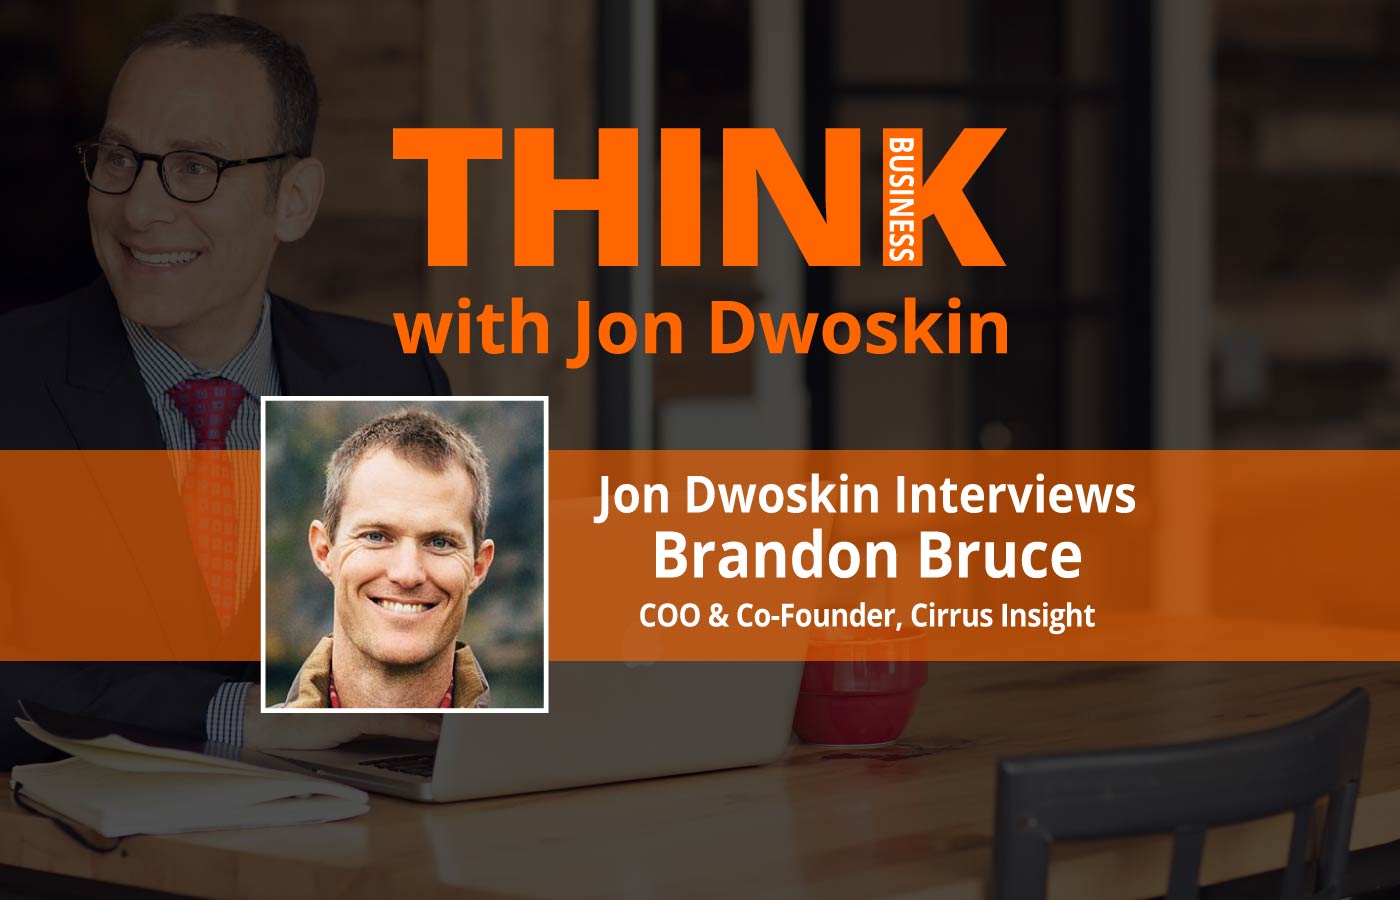 THINK Business Podcast: Jon Dwoskin Interviews Brandon Bruce, COO & Co-Founder, Cirrus Insight 